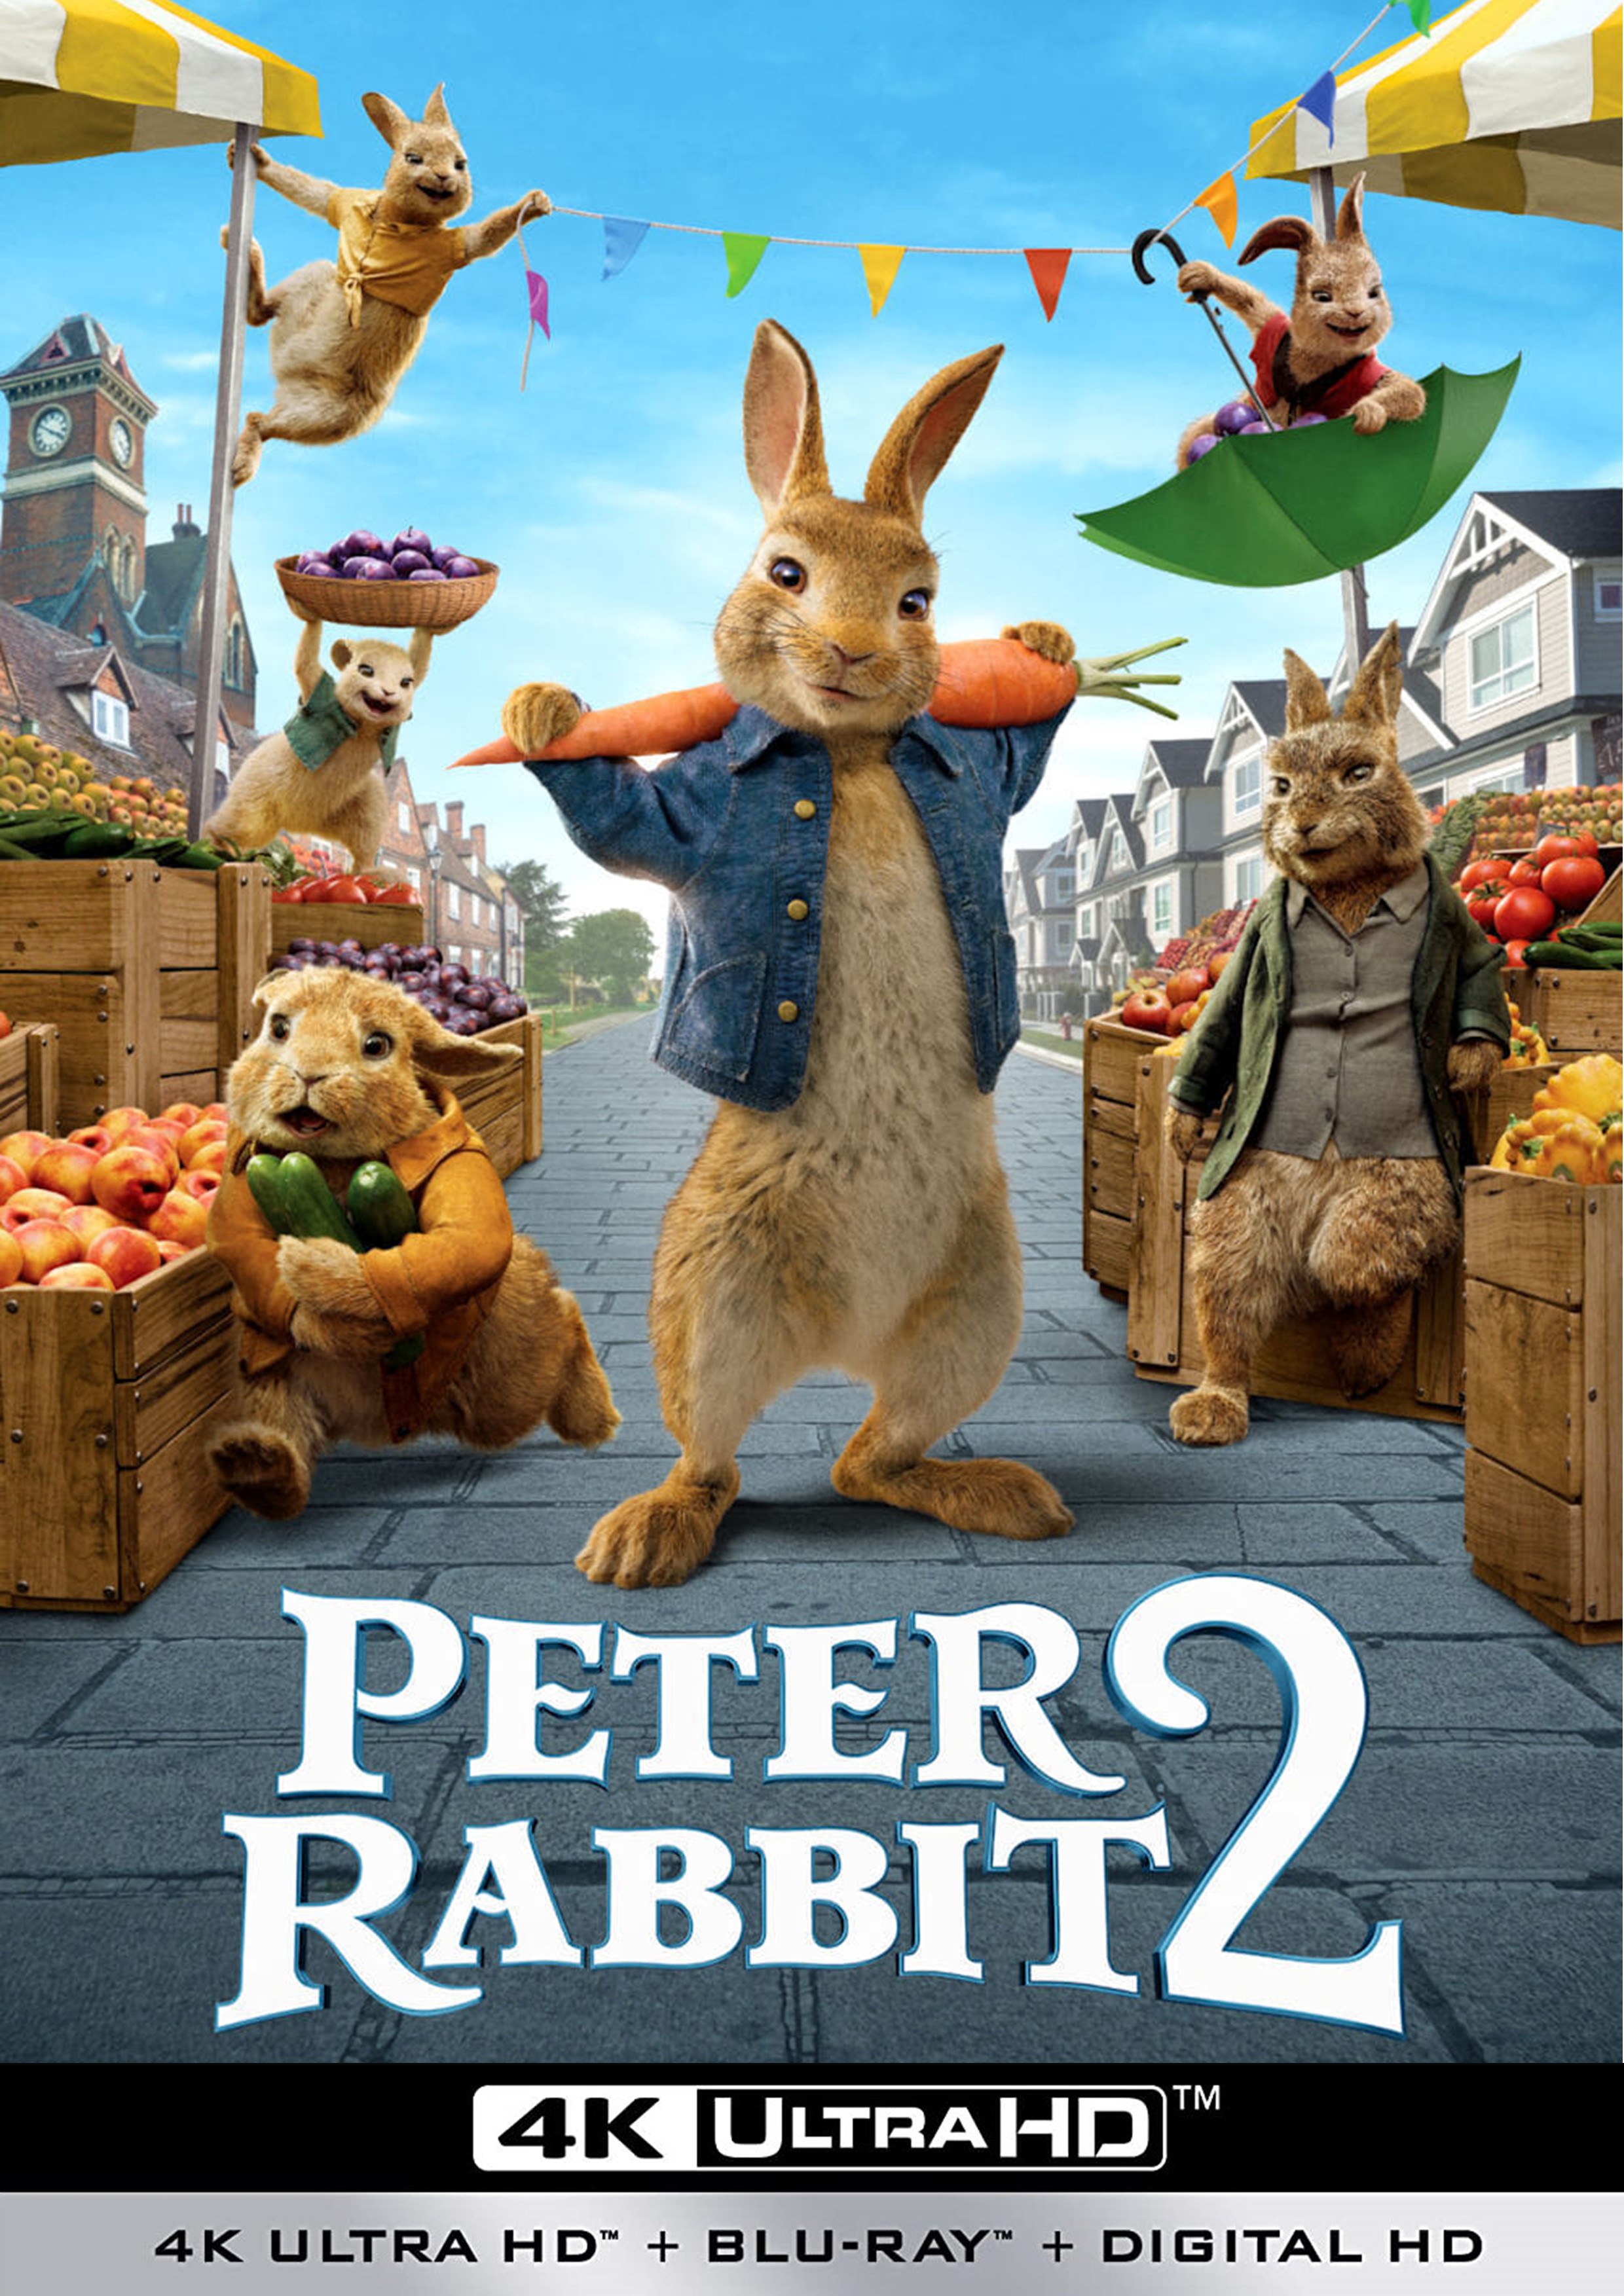 Stiahni si UHD Filmy Kralicek Petr bere do zajecich / Peter Rabbit 2:The Runaway (2021)(CZ/SK)(2160p 4K BRRemux) = CSFD 56%